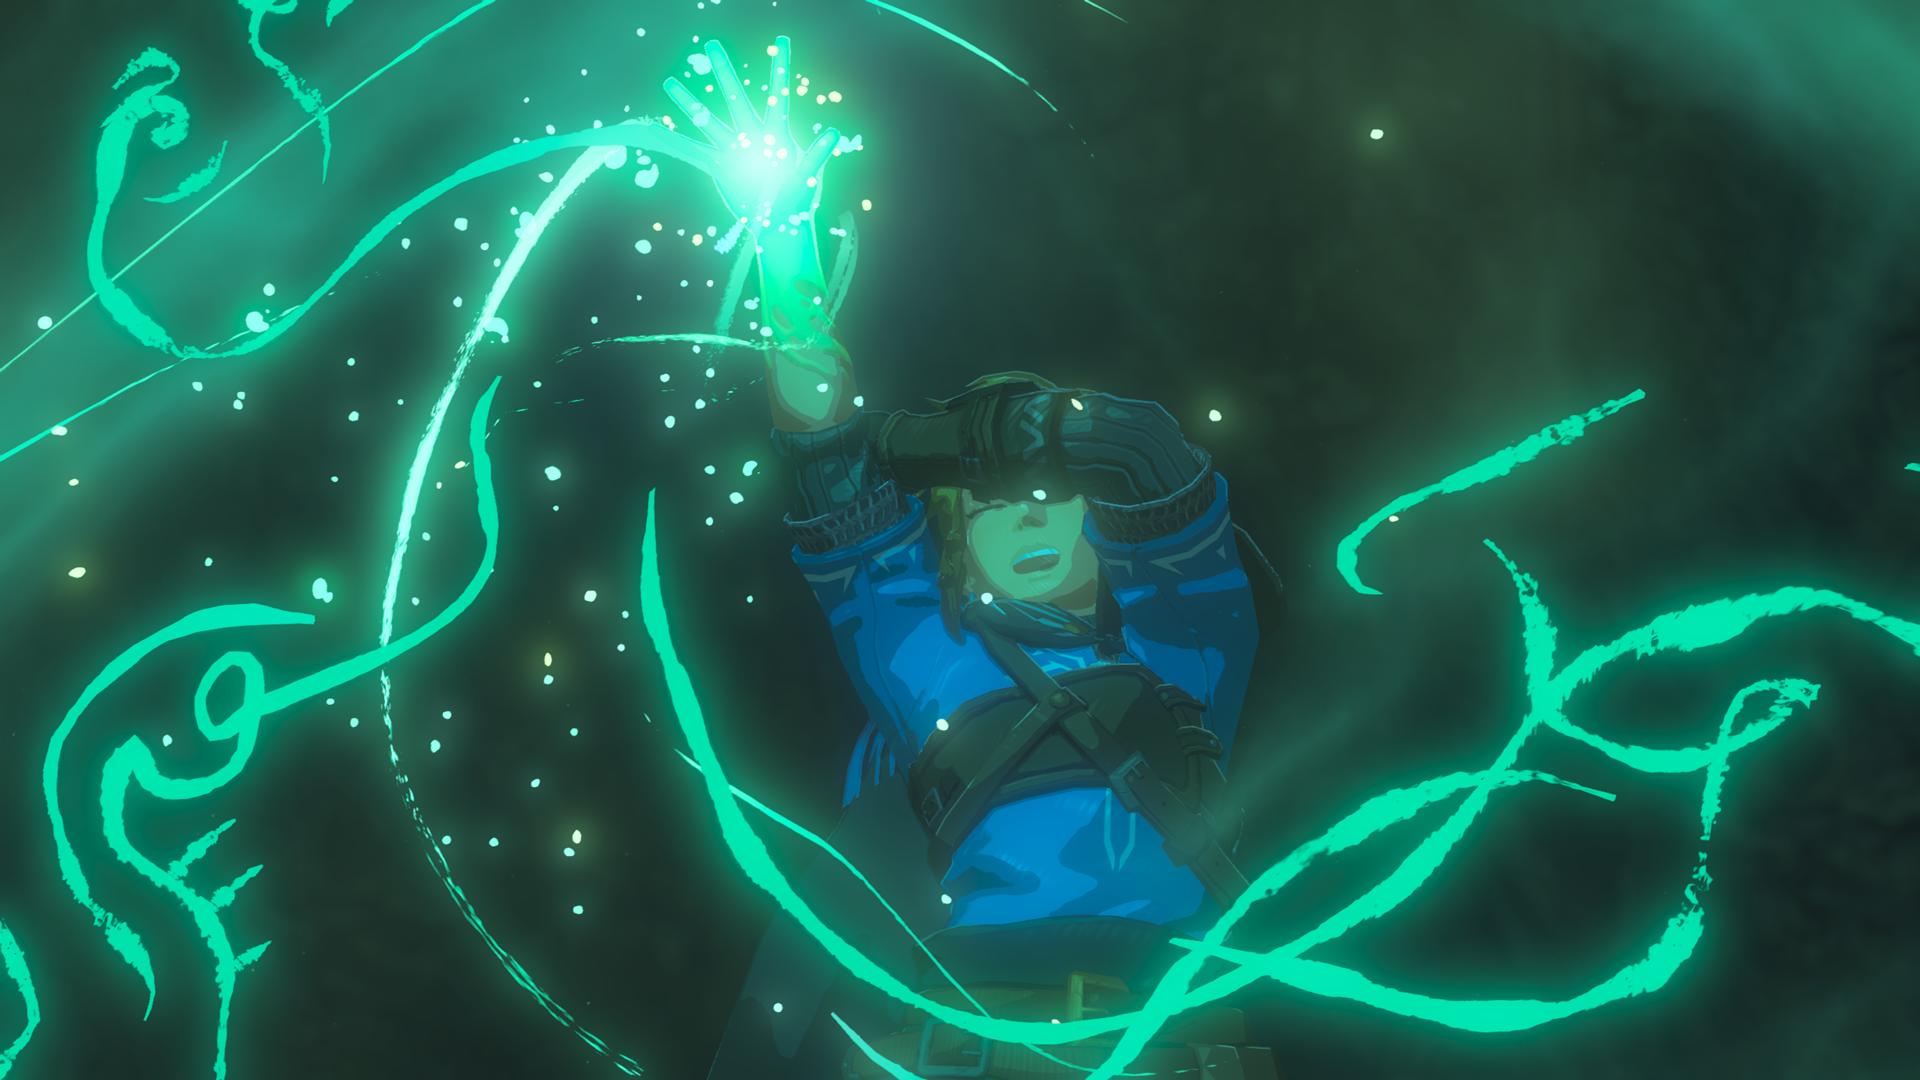 E3: Legend of Zelda Breath of the Wild sequel in development